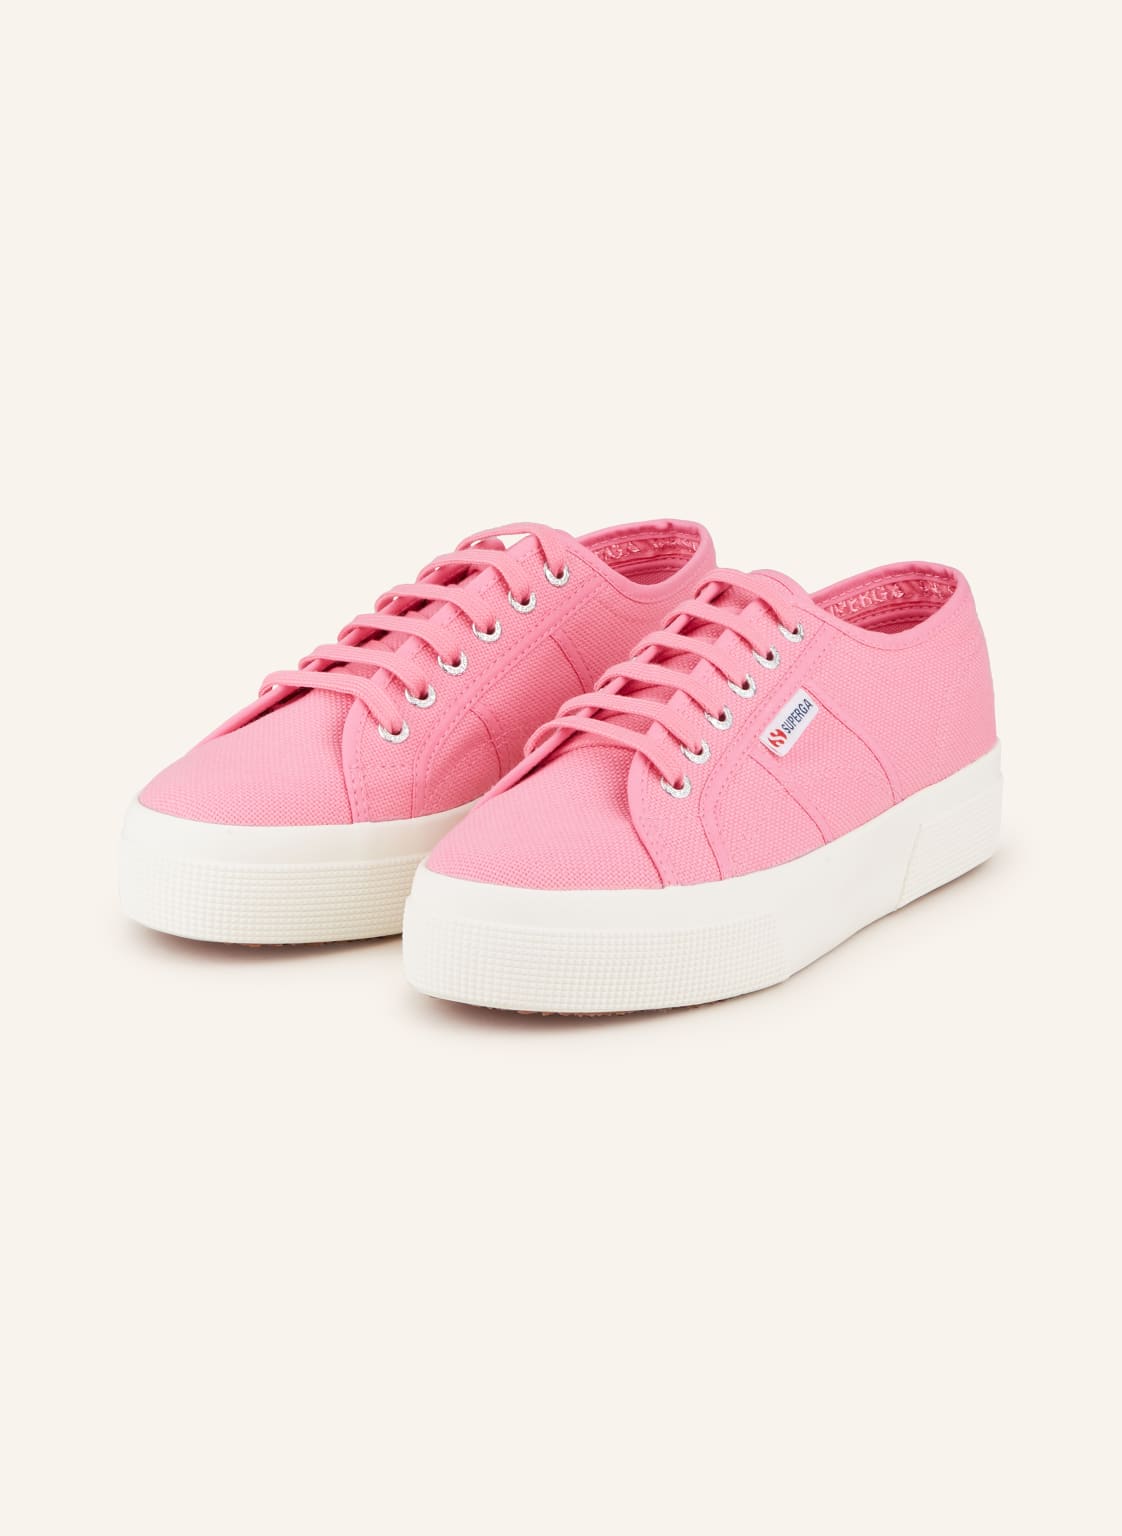 Superga Sneaker pink von Superga